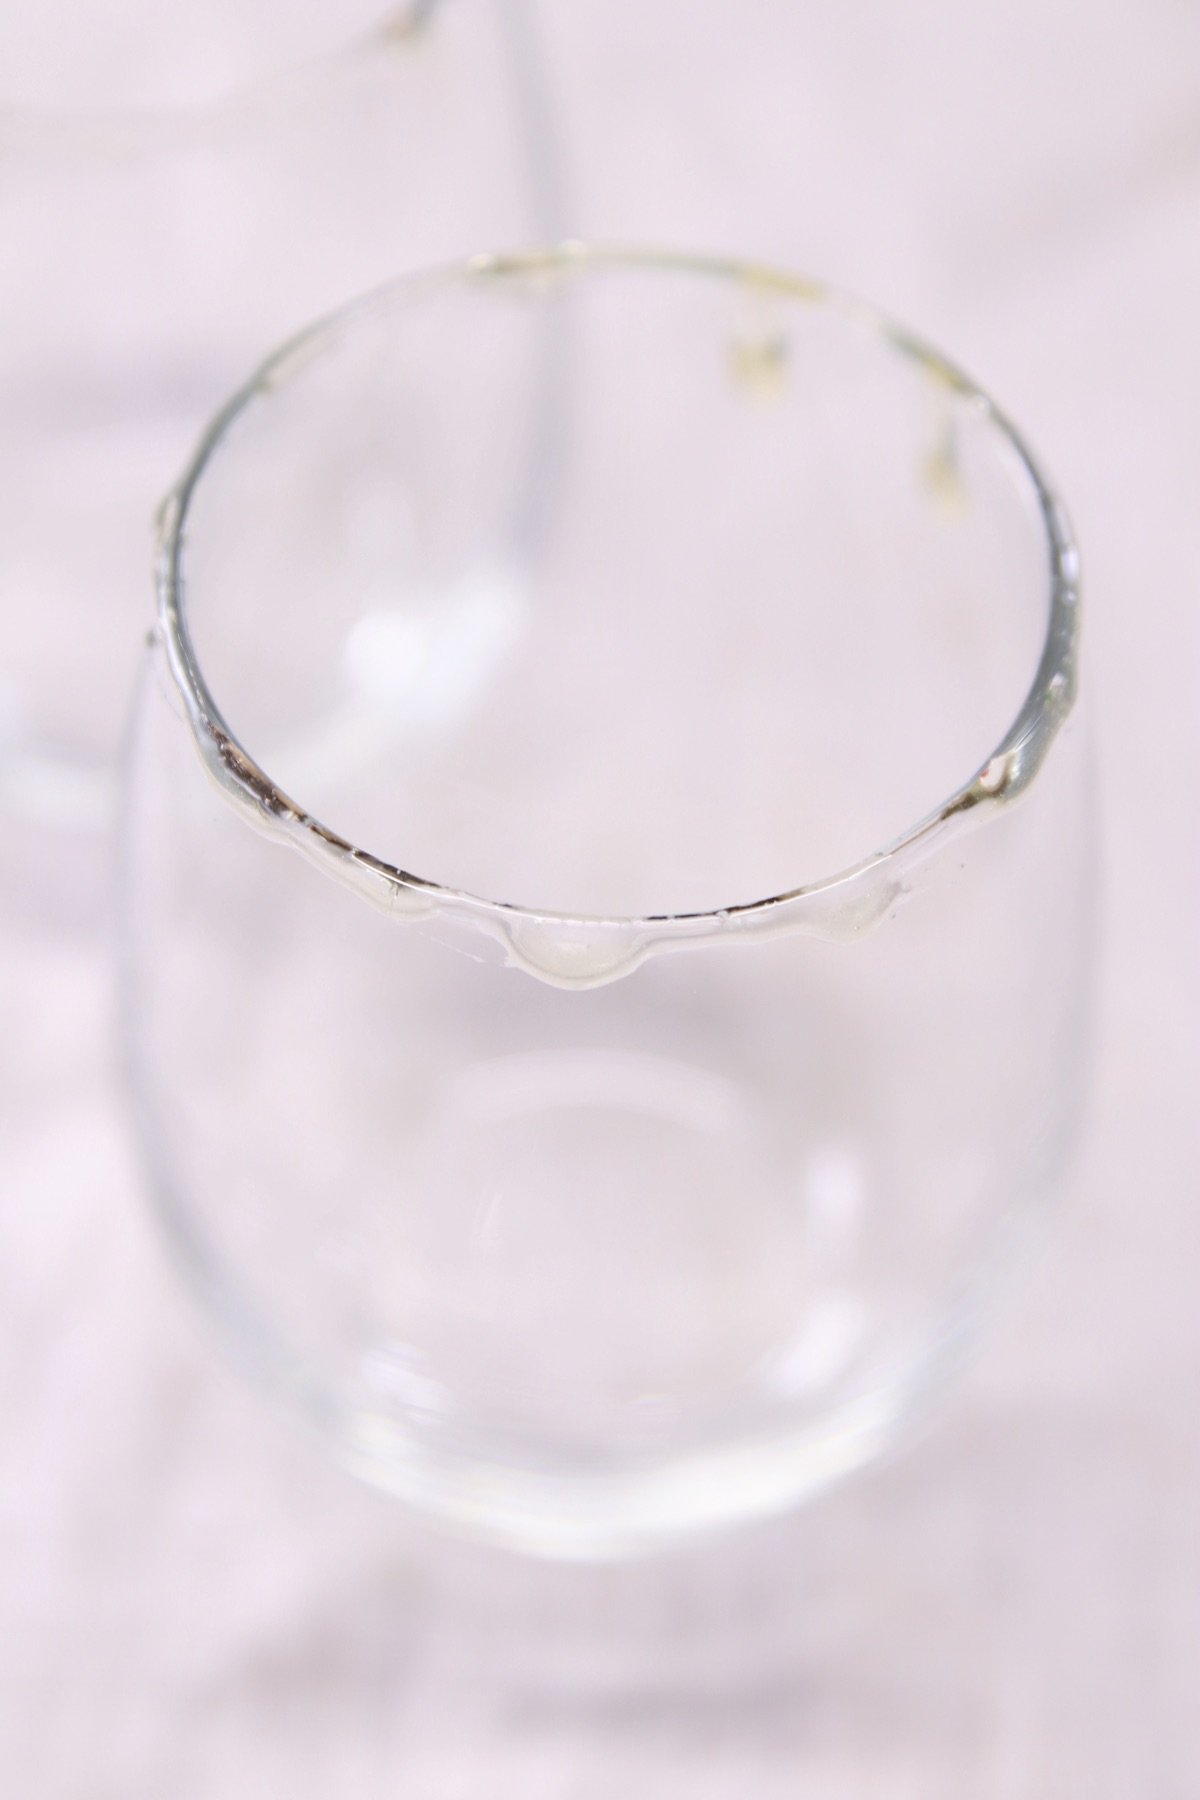 stemless wine glass with honey rim